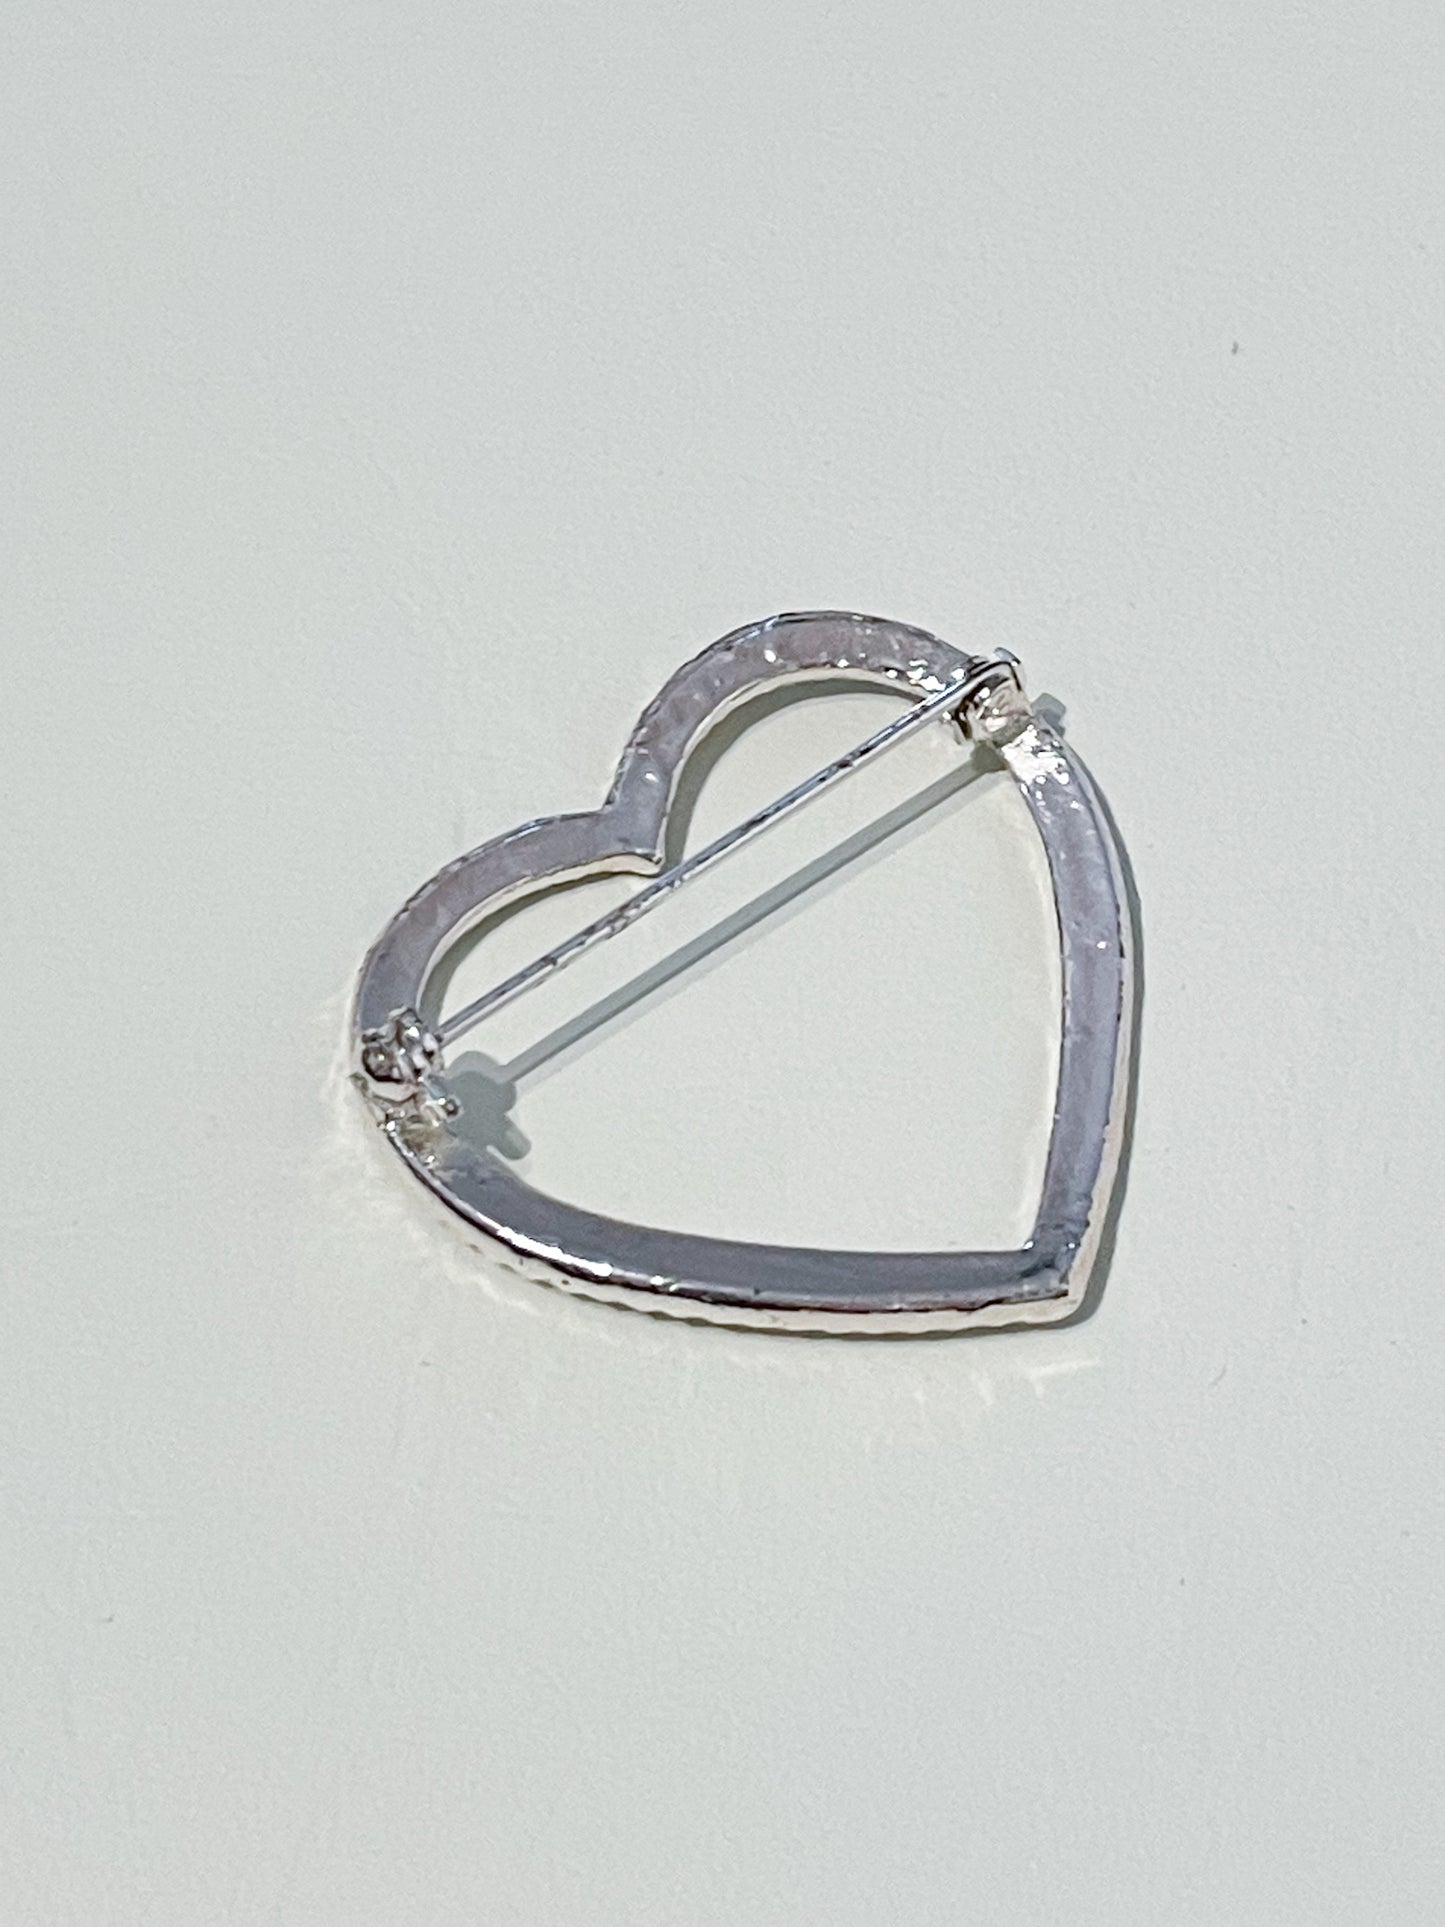 Vintage Rhinestone Heart Brooch Pin